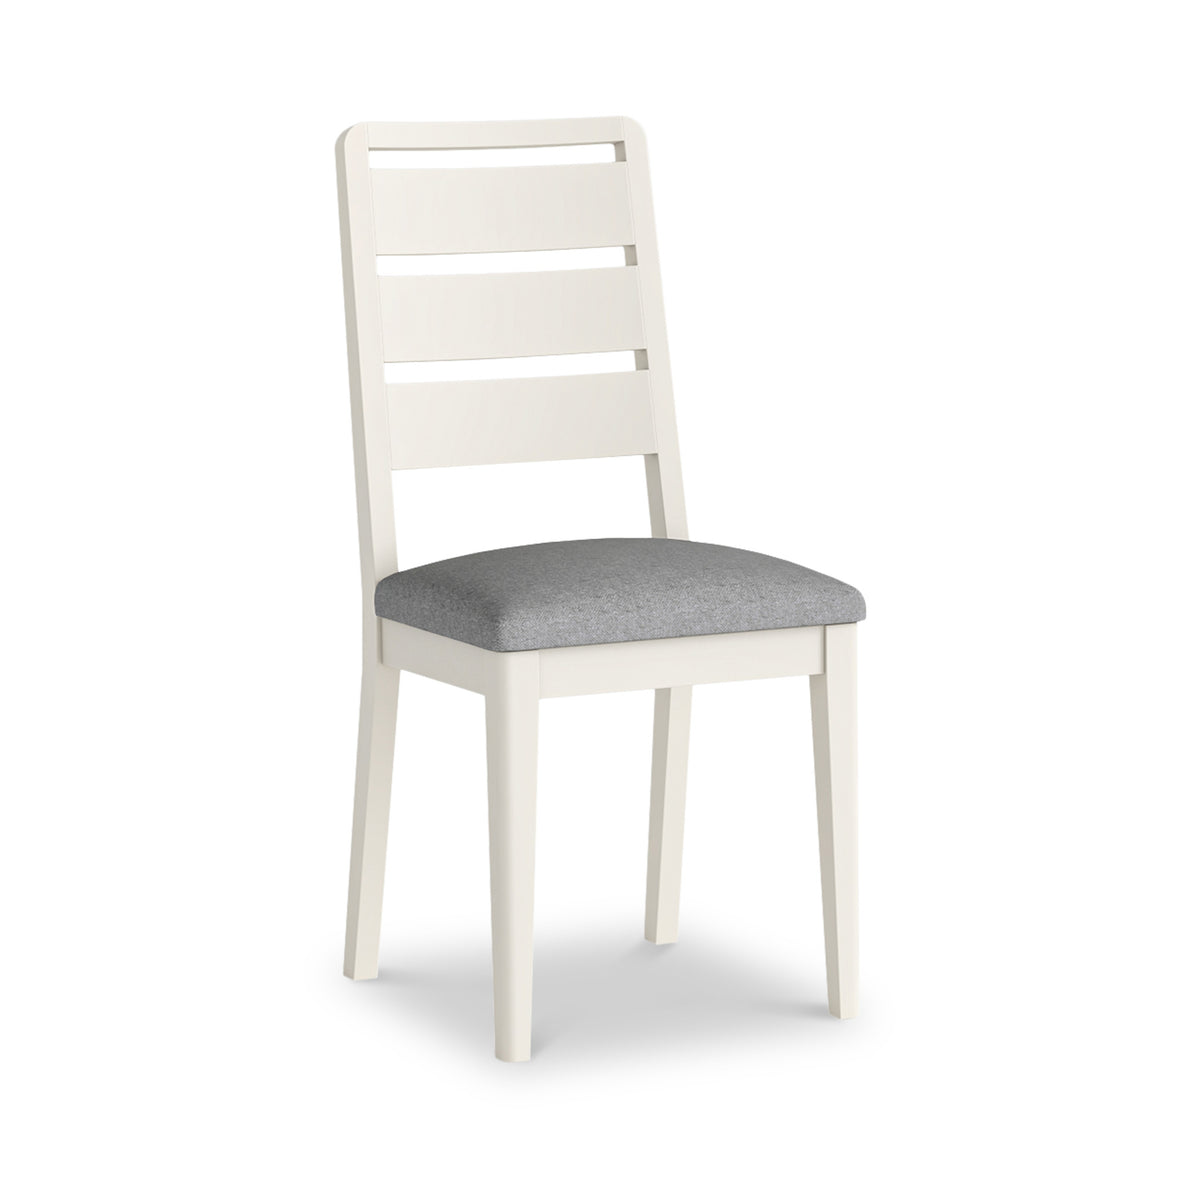 Penrose Coconut White Ladder Back Dining Chair from Roseland Furniture